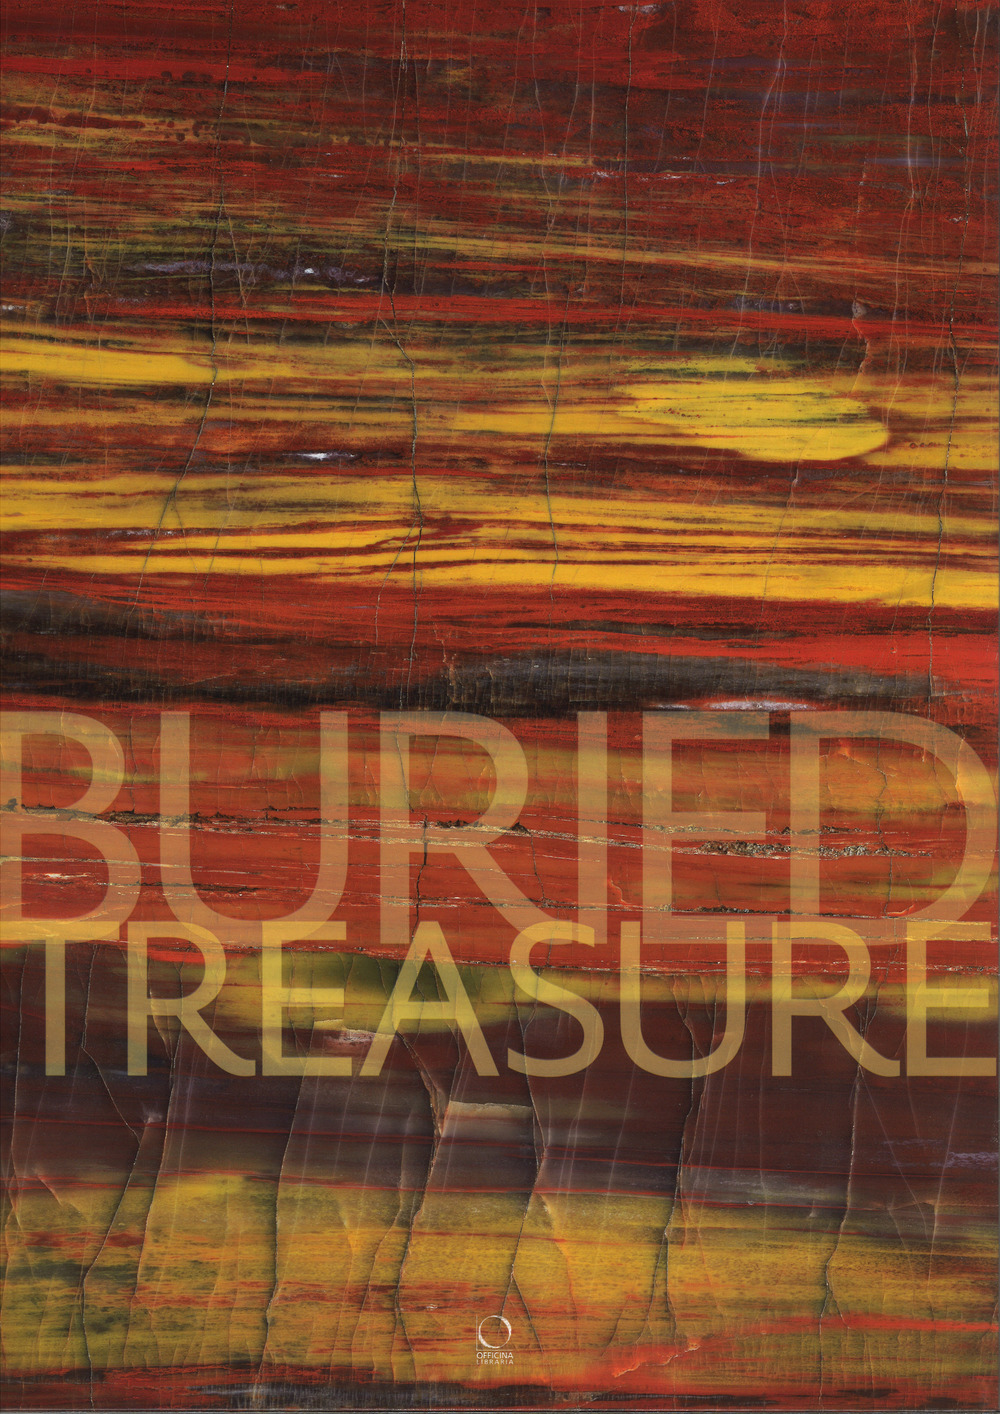 Buried treasure. Ediz. illustrata